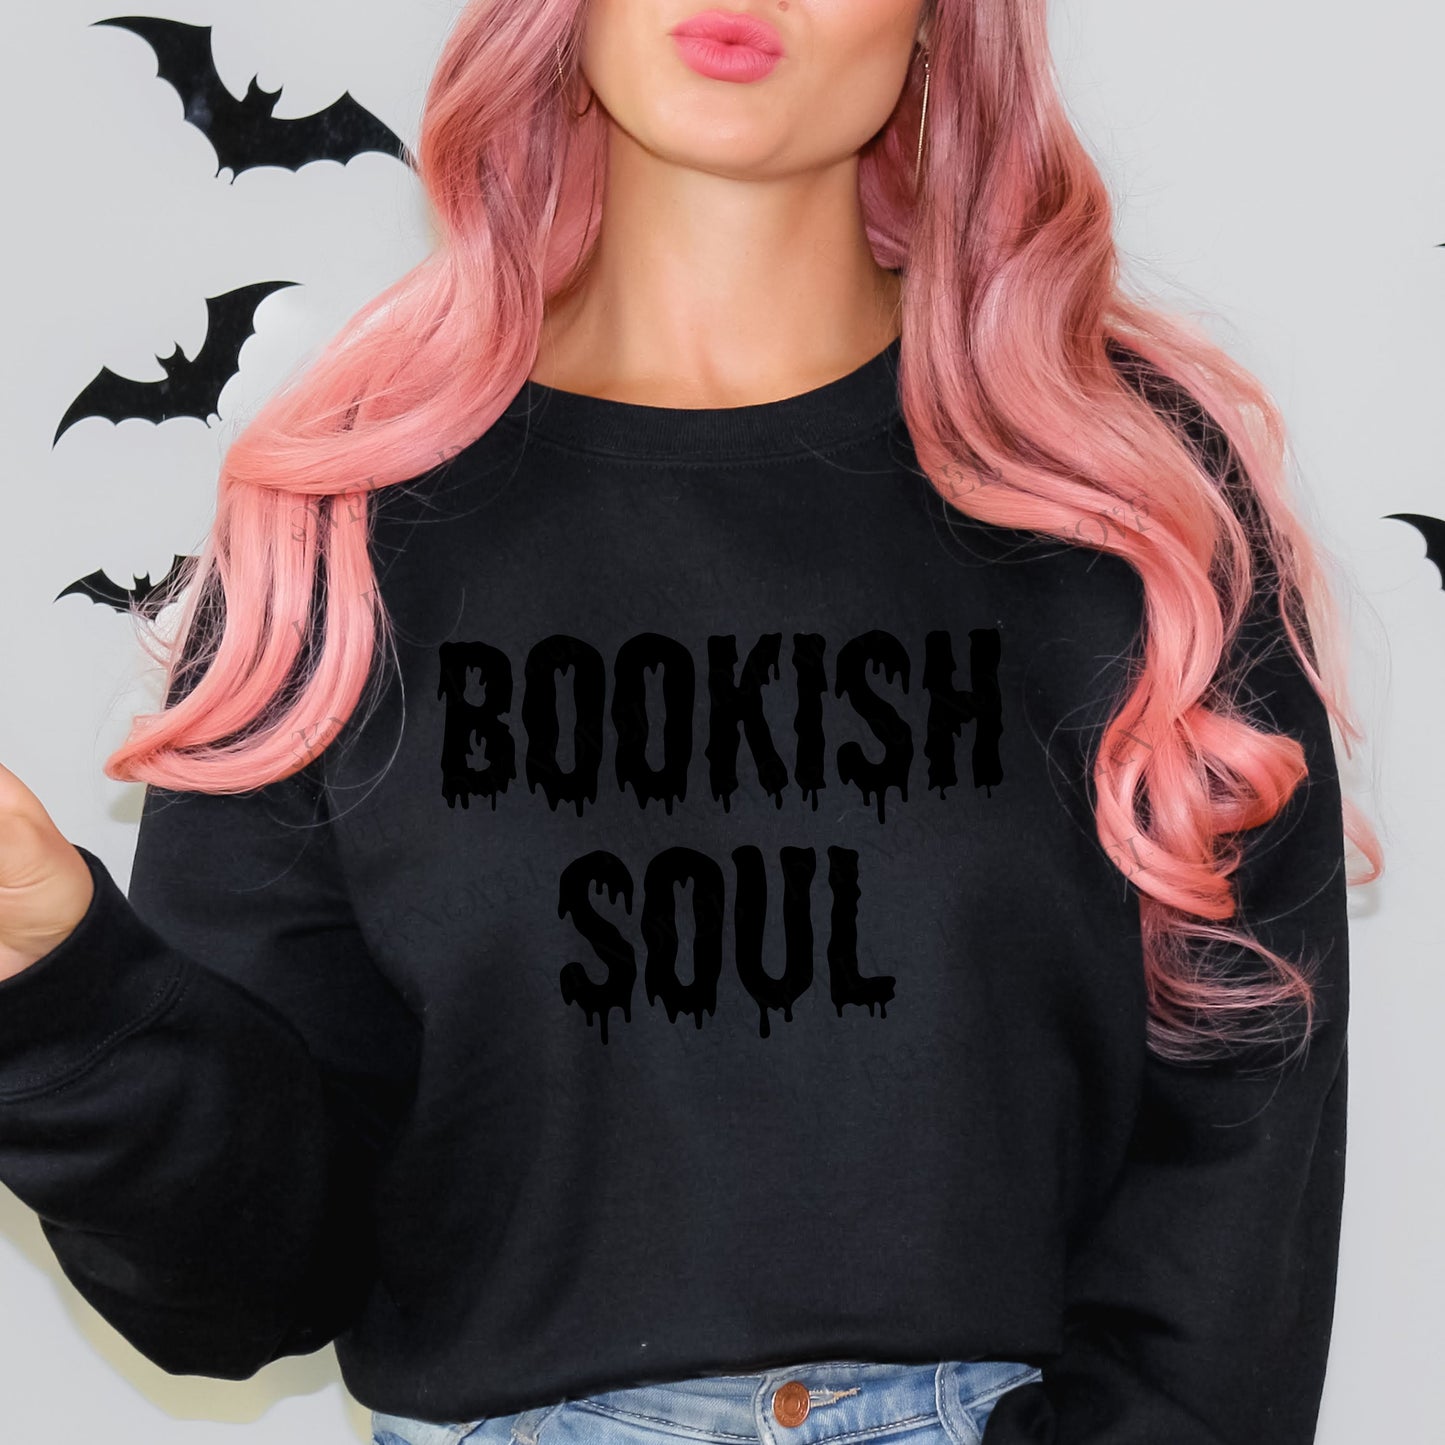 Bookish Soul Halloween Crewneck Sweatshirt